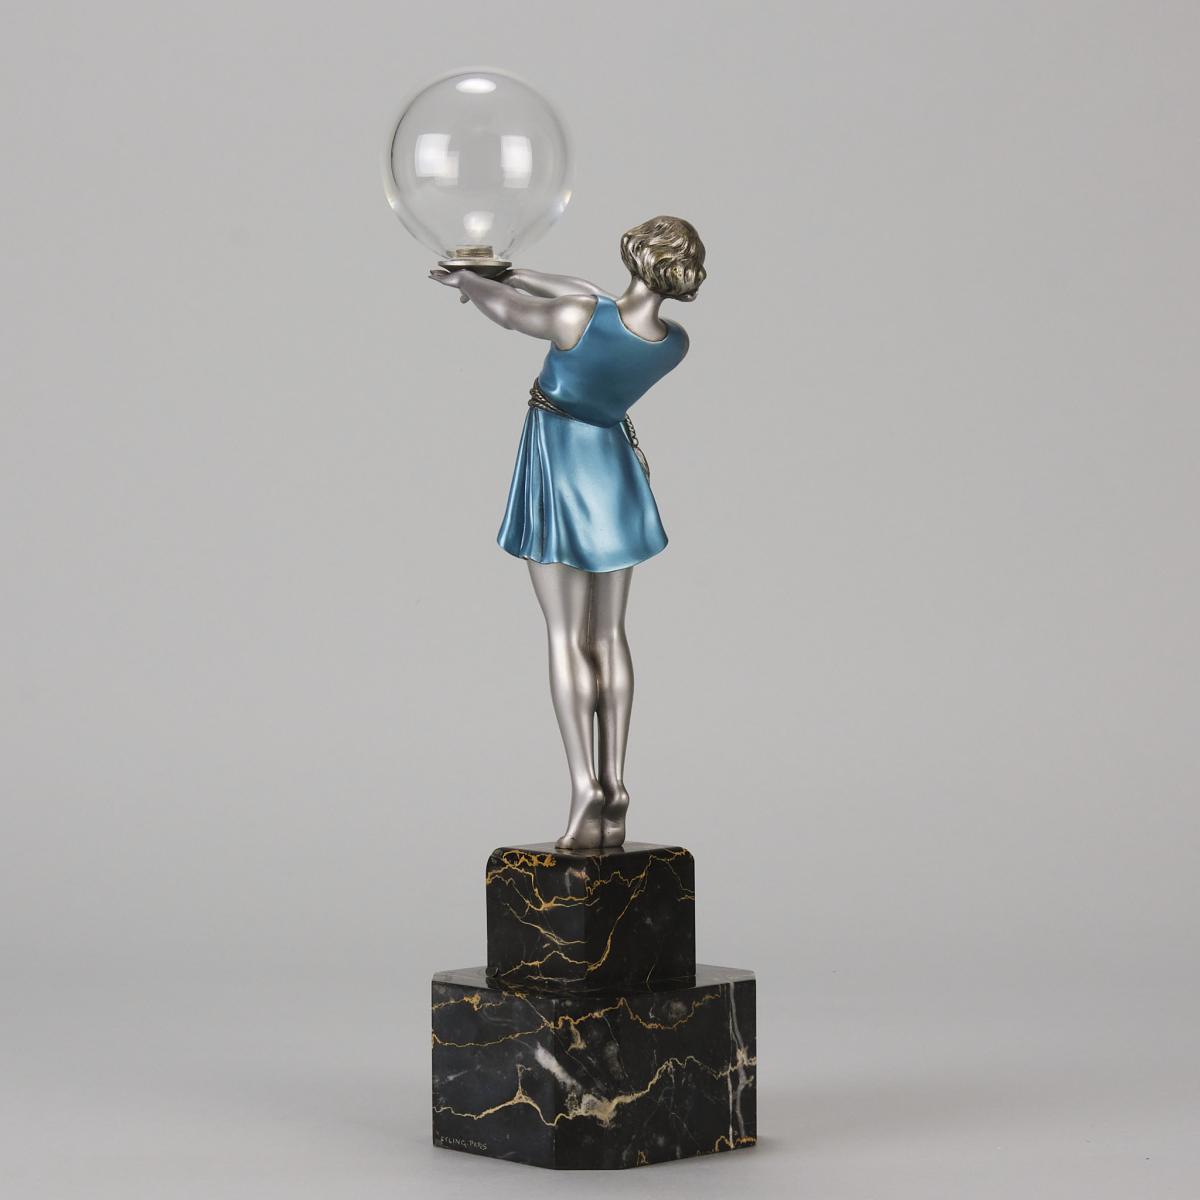  Early 20th Century Art Deco Bronze entitled "Bubble Dancer" By Armand Godard